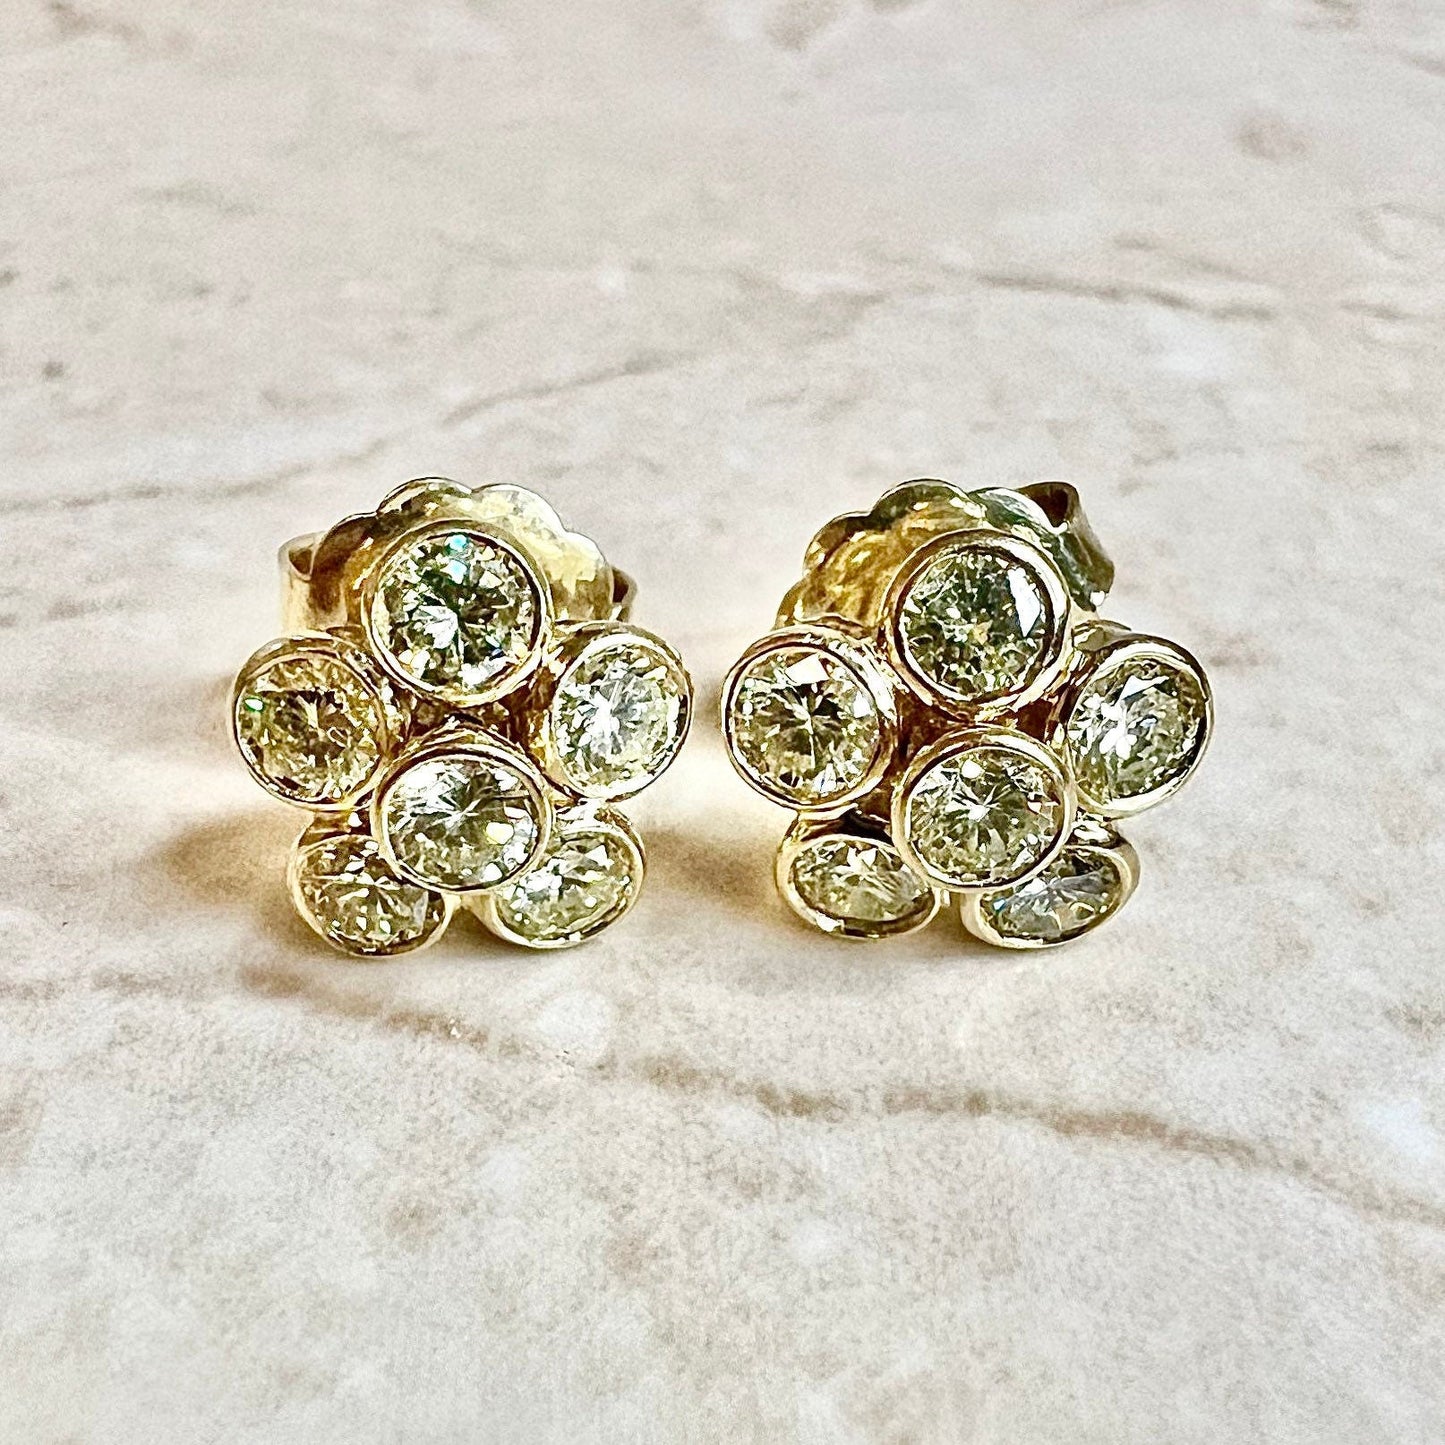 18K Convertible Yellow Diamond Halo Stud Earrings By Carvin French-Yellow Gold Diamond Halo Earrings-Diamond Studs-Diamond Cluster Earrings